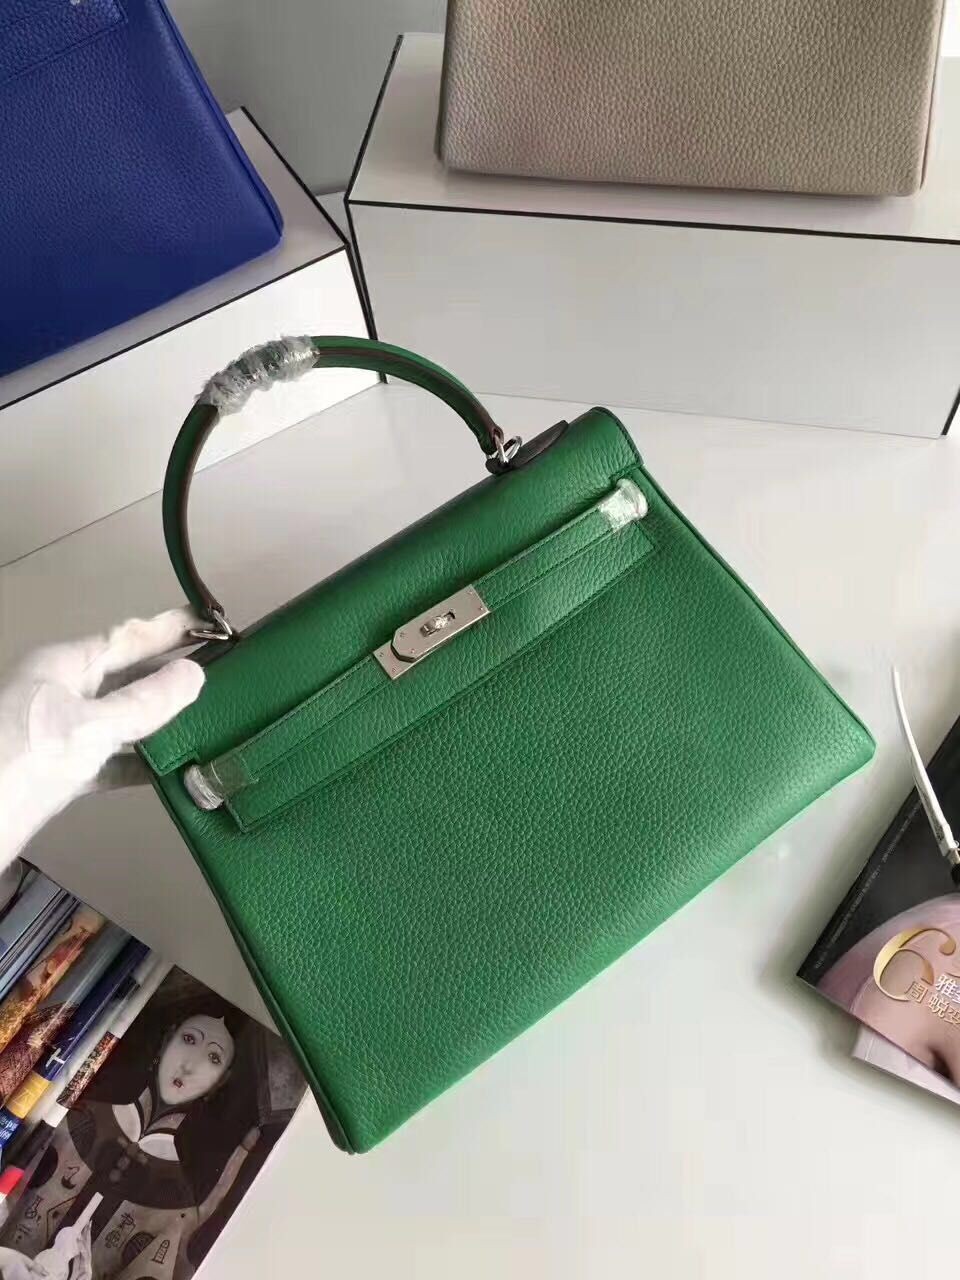 Hermes Kelly 32cm Togo leather handbag green silver